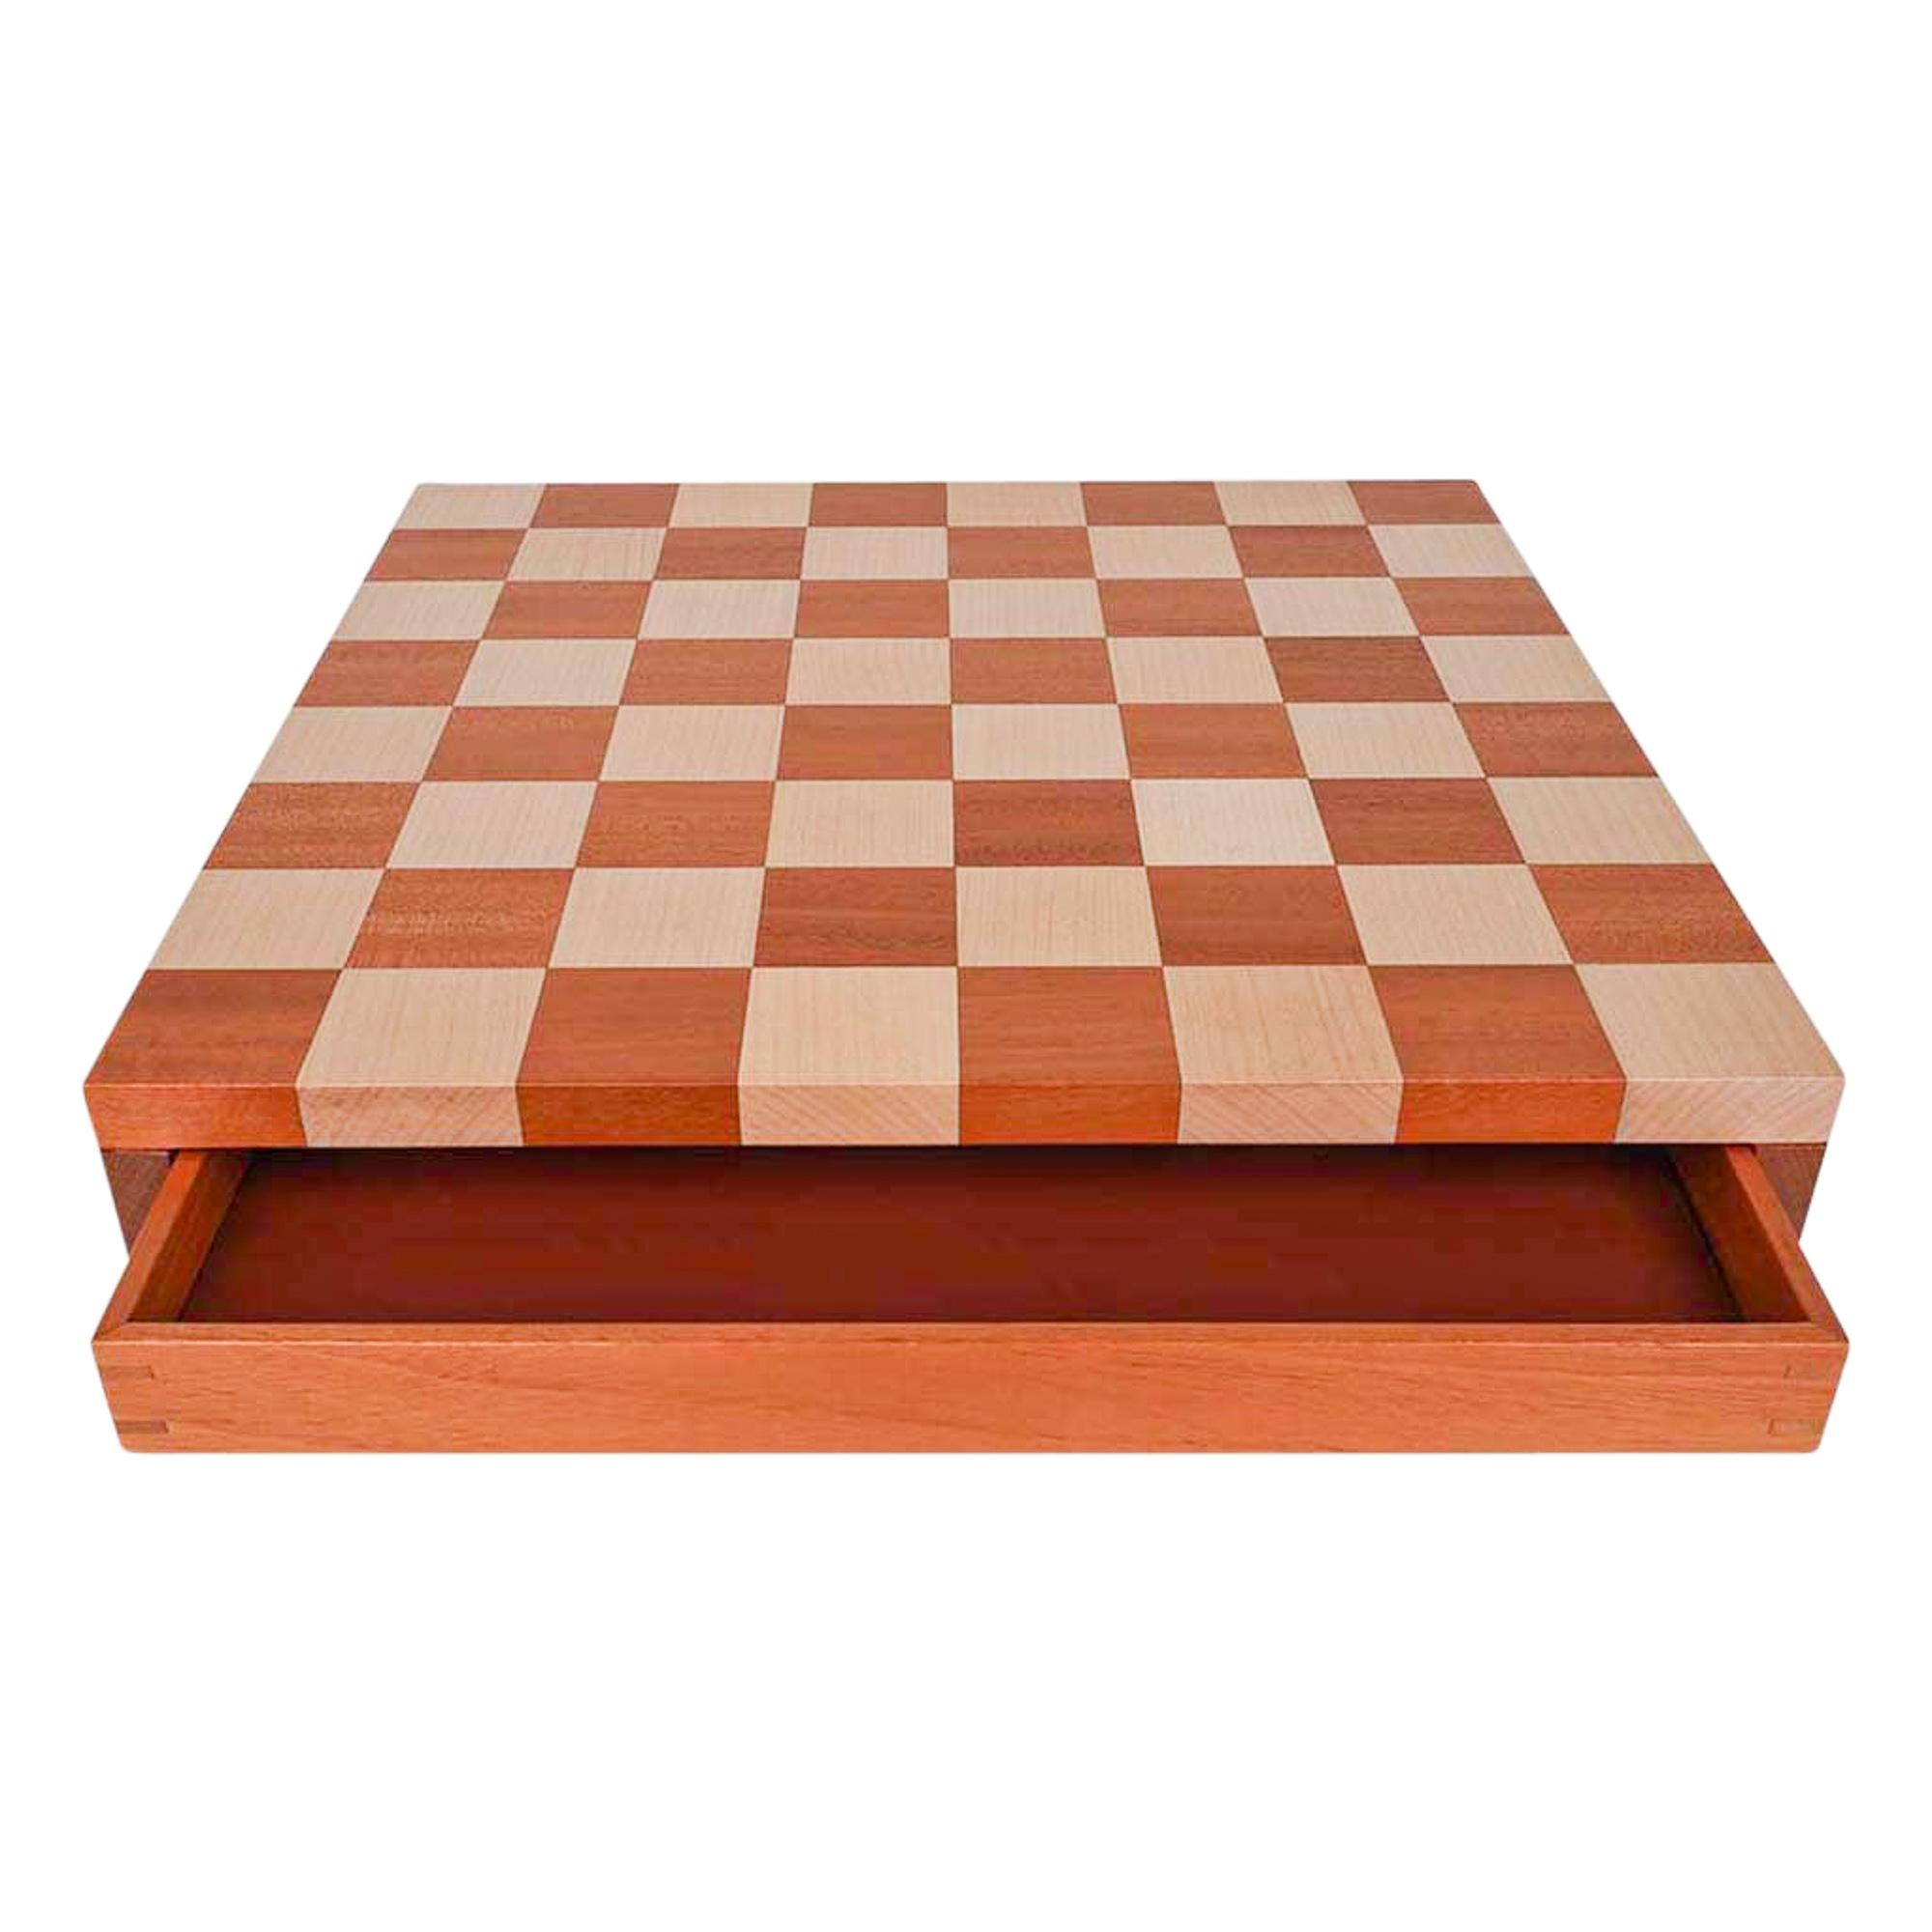 Hermes Samarcande Chess Set Sycamore Mahogany Lambskin Drawers New w/ Box 5